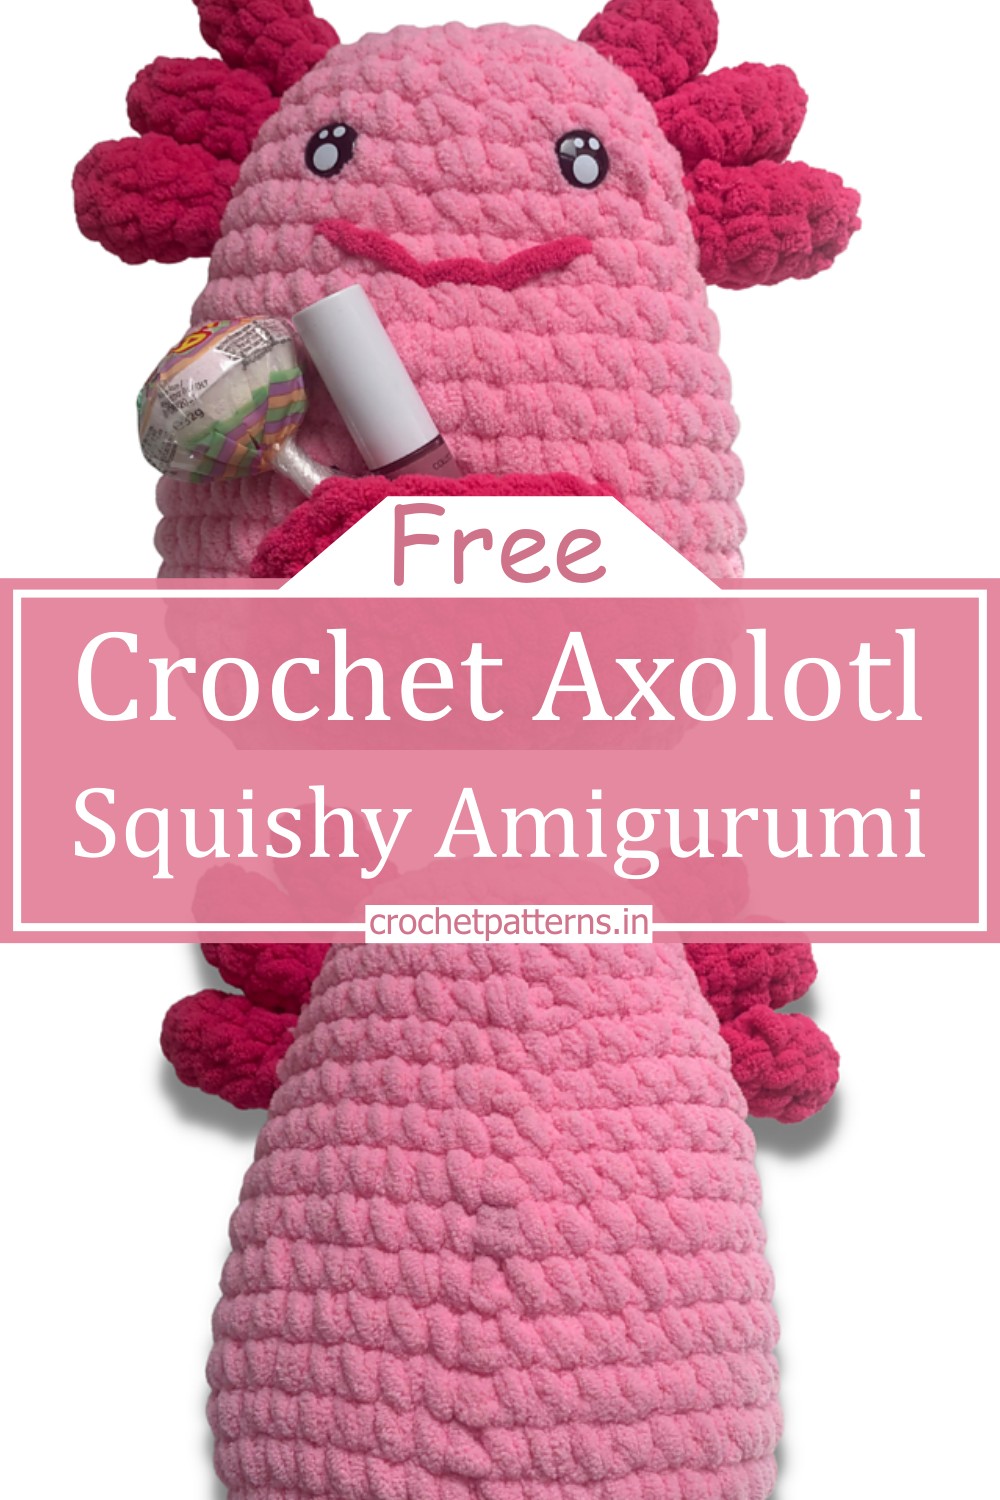 Axolotl Squishy Amigurumi